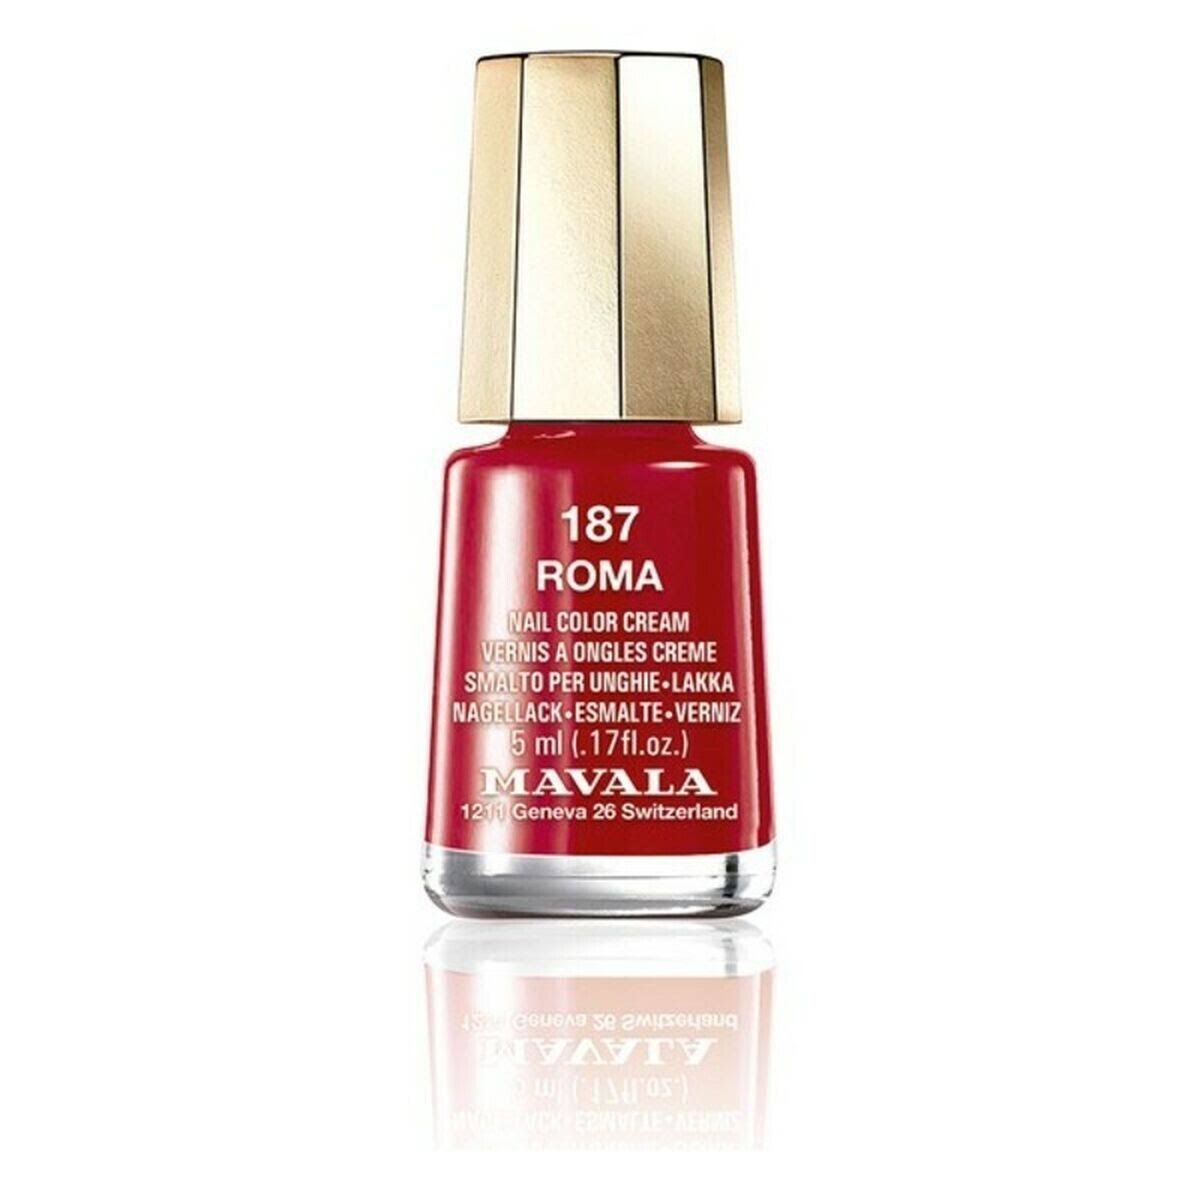 Mavala Mini Nail Color Polish - 187 Roma, 5ml